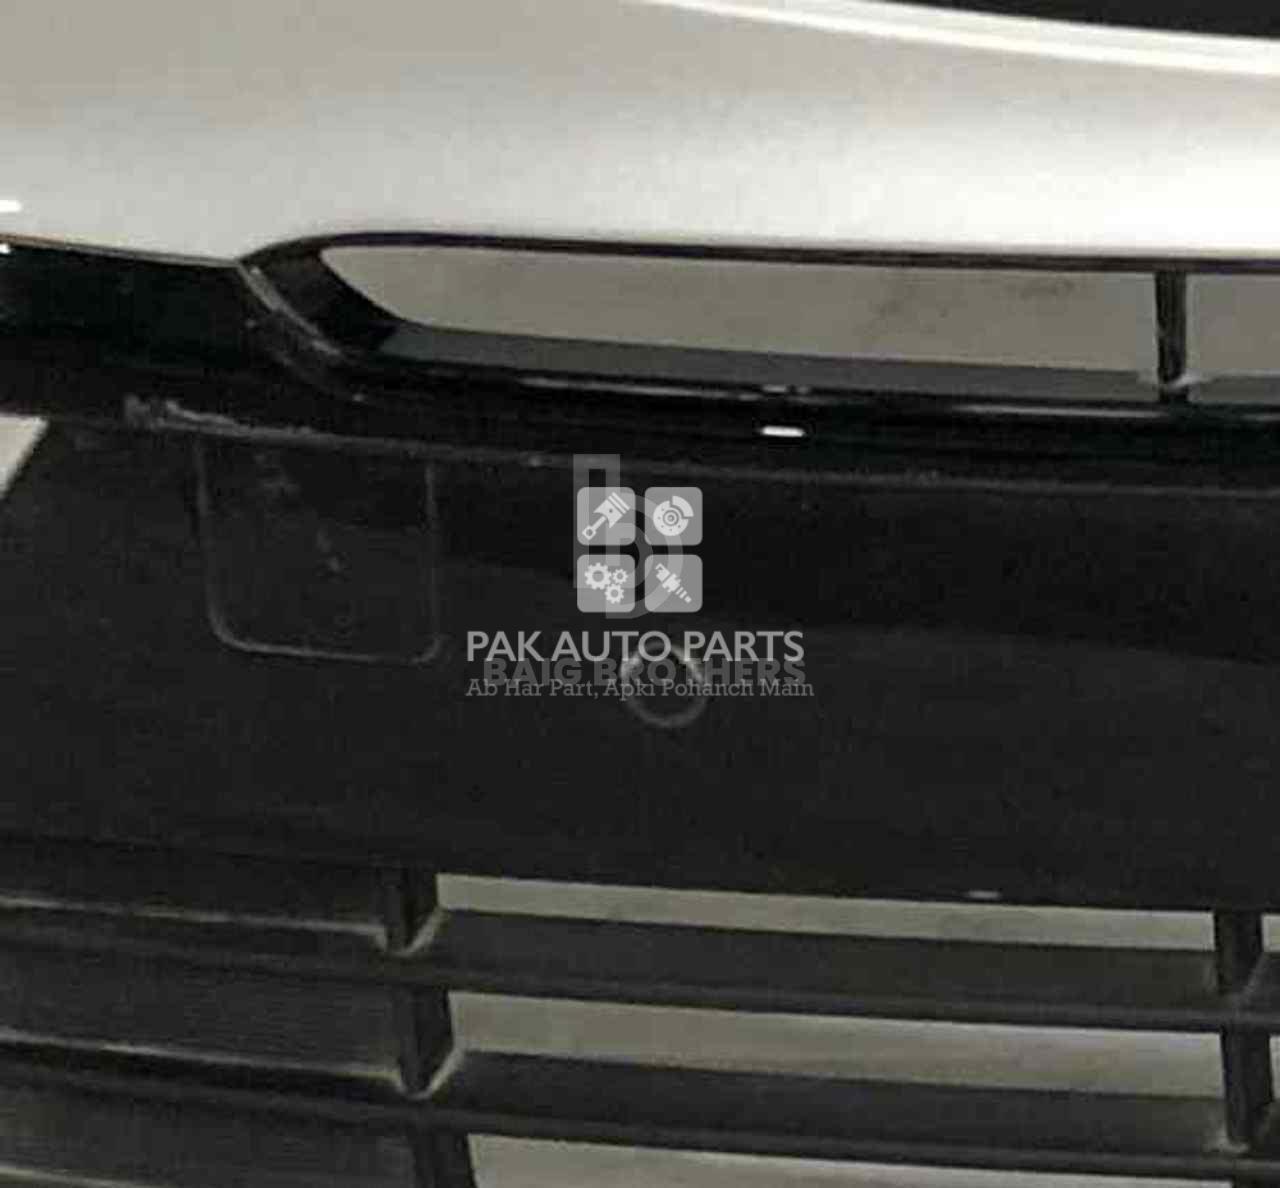 Picture of Kia Sportage 2020-2021 Front Parking Sensor